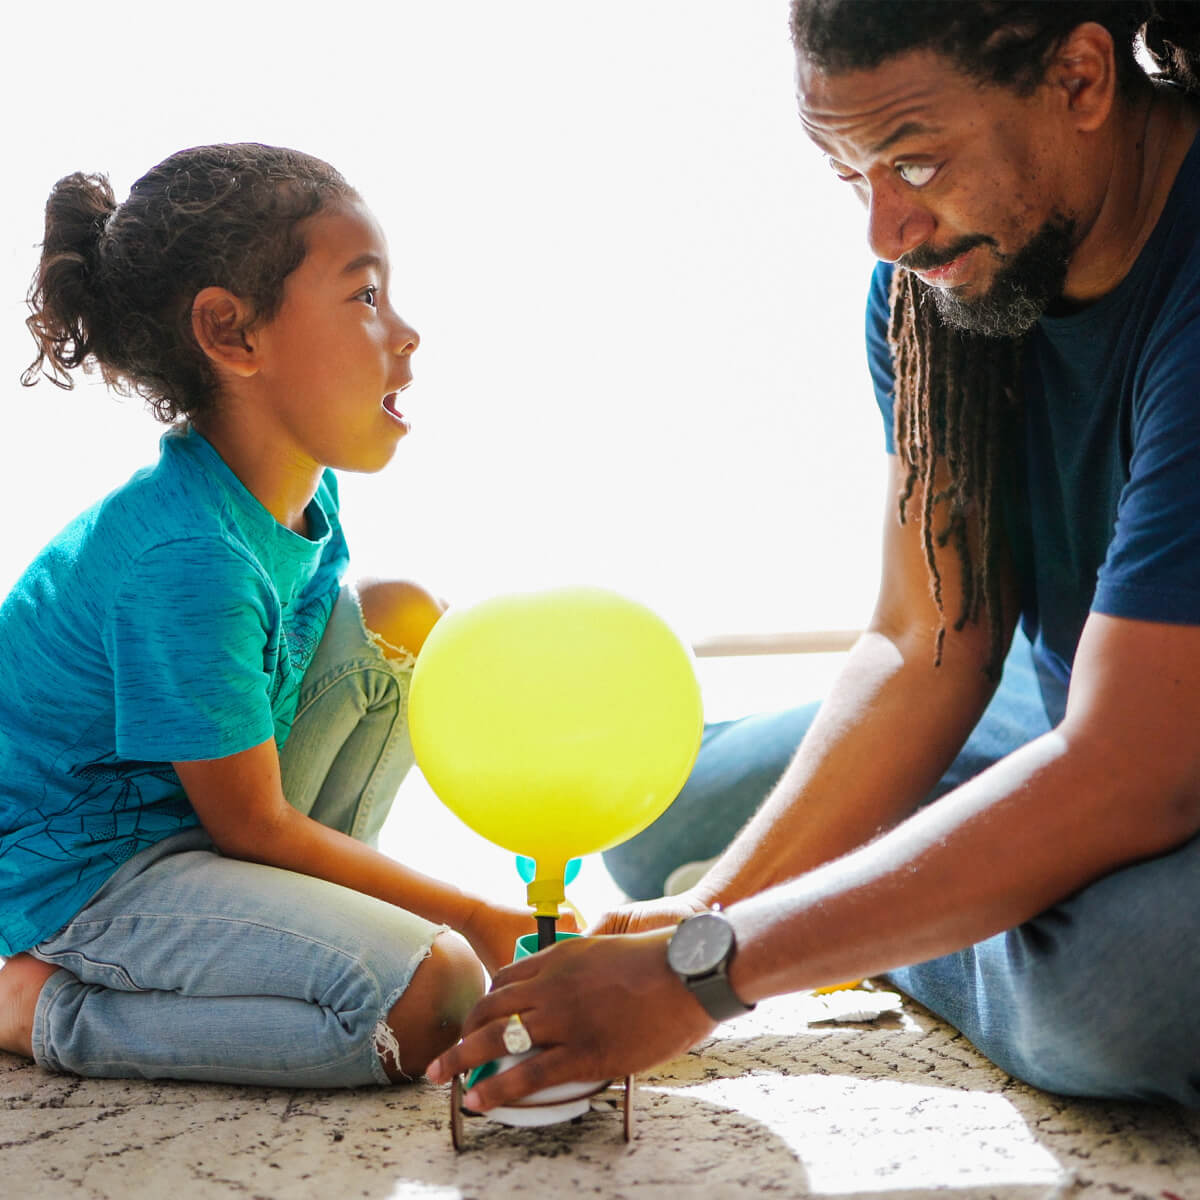 DIY動手做氣球動力車加深幼兒對身體動能的認識，學習肌肉收縮以及能量運作。